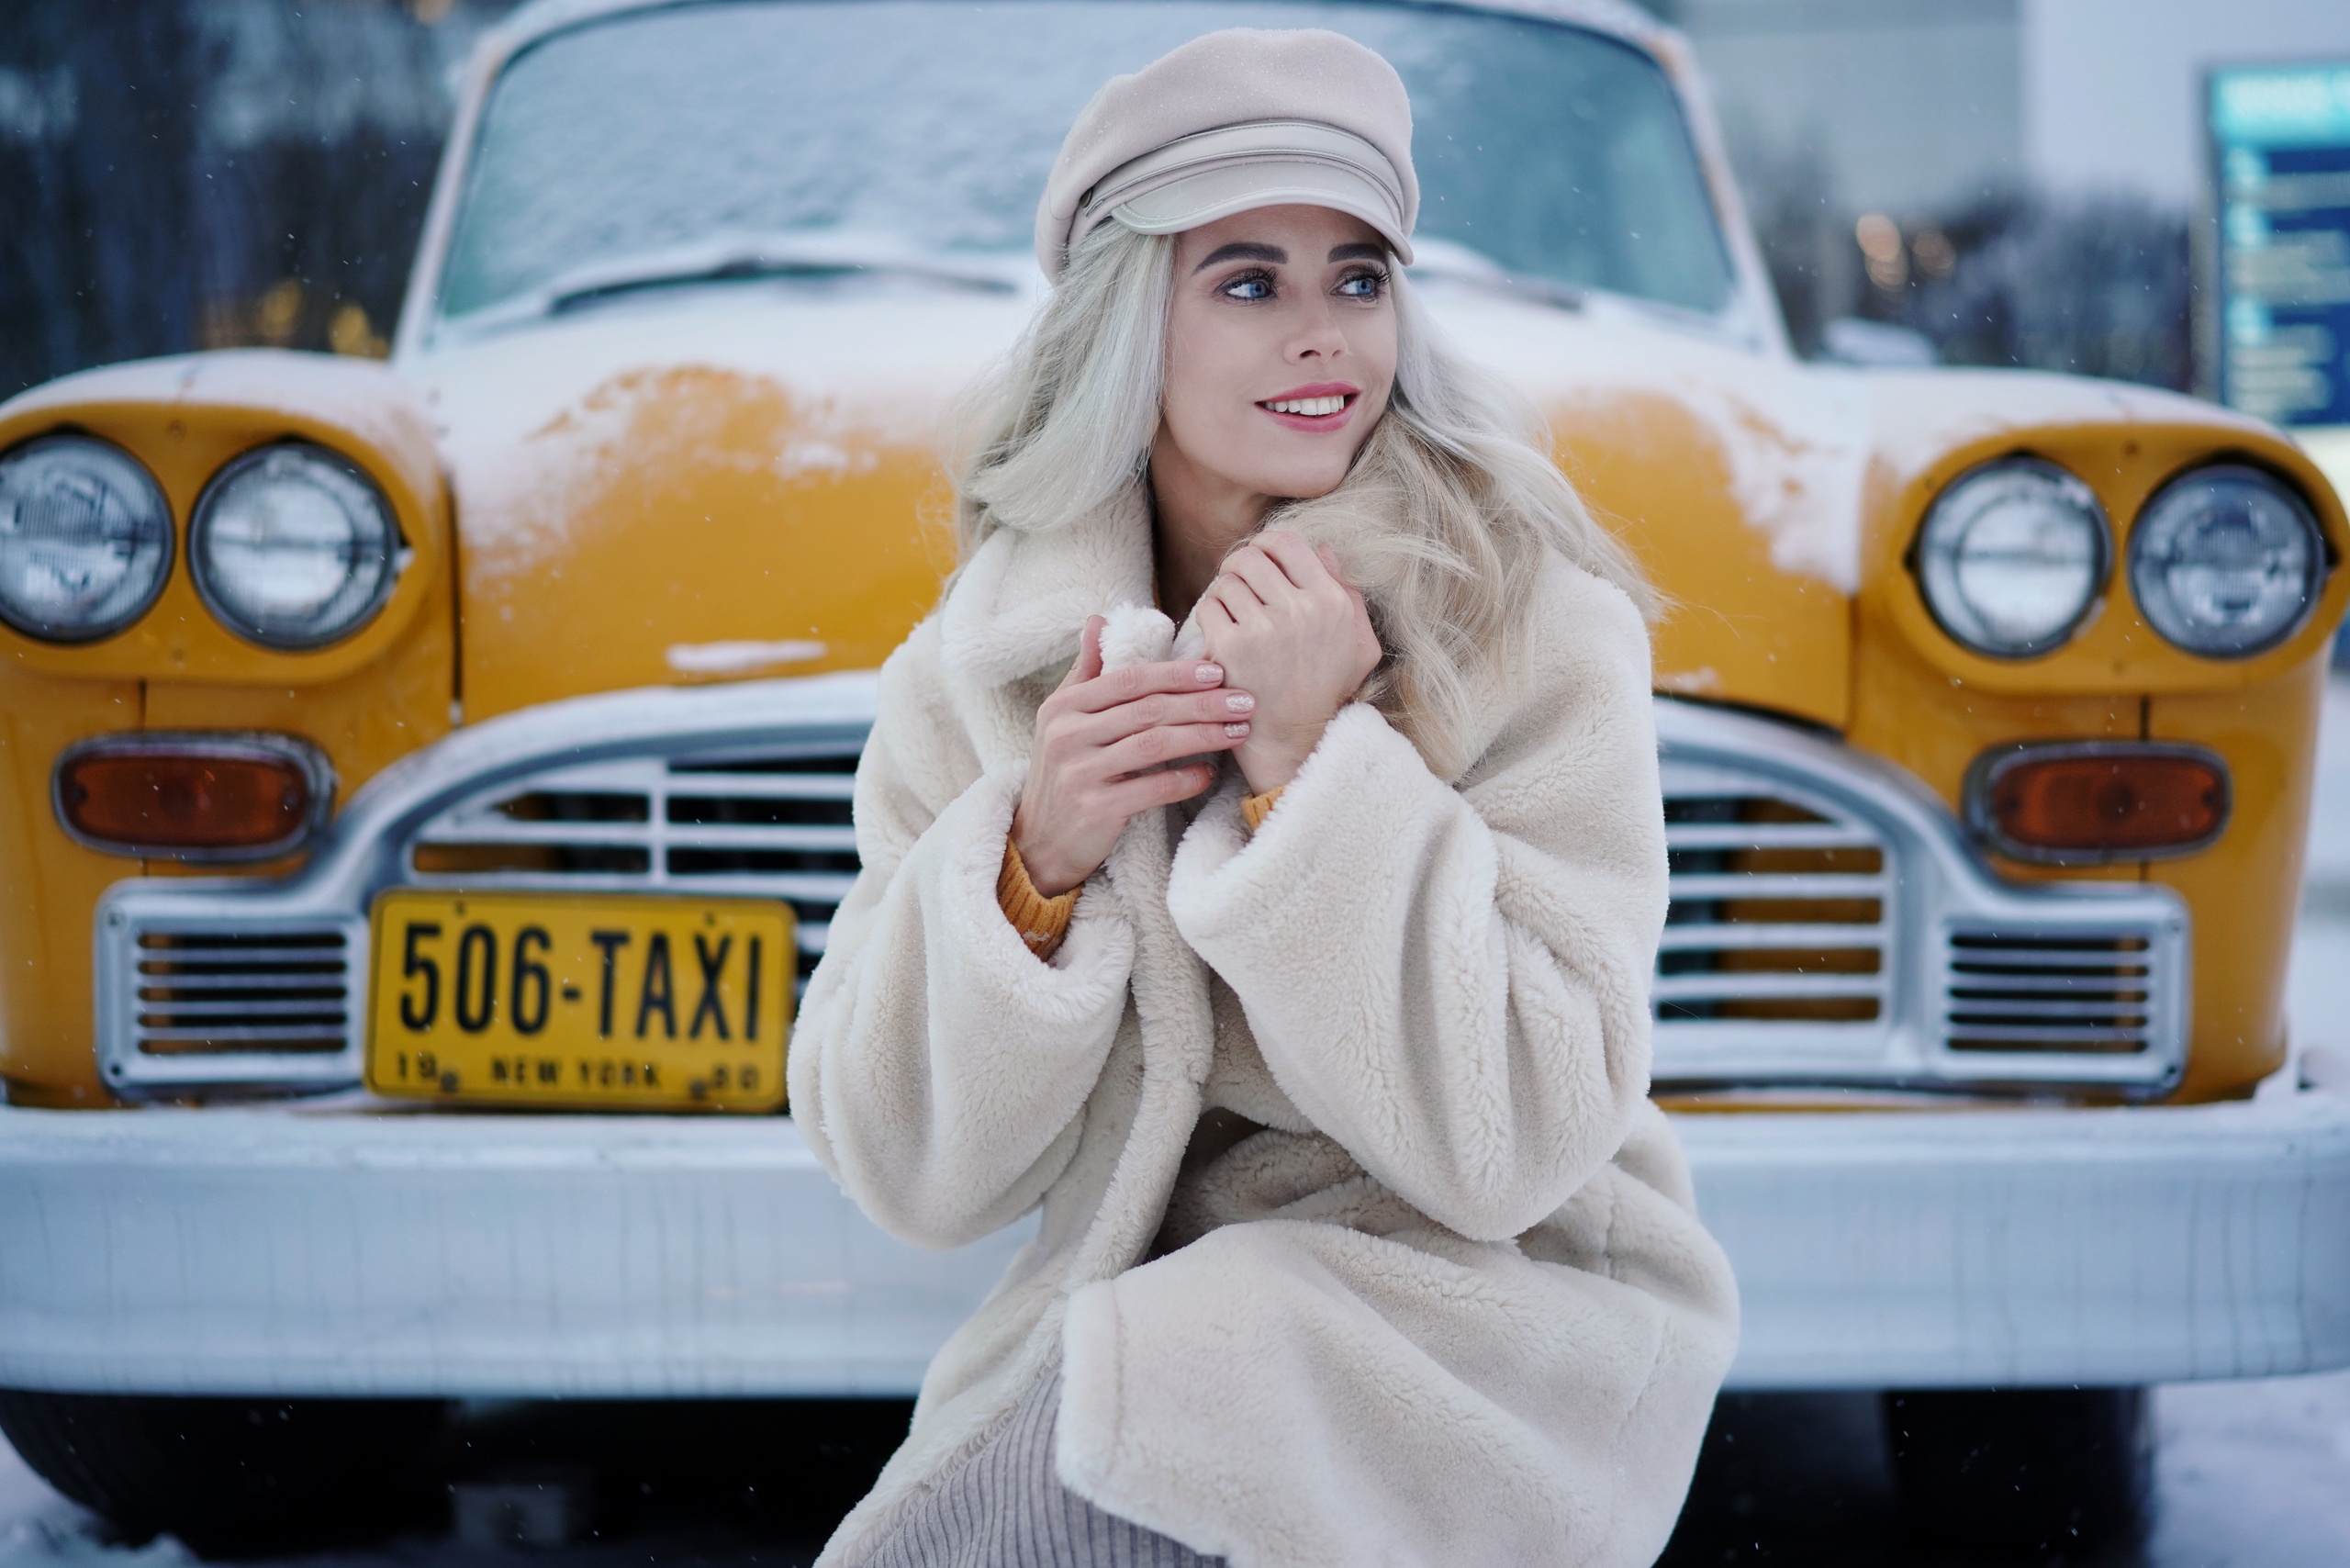 Taxi Sergei Churnosov Numbers Blonde Model Women Women Outdoors Urban Car Yellow Cars Vehicle Happy  2560x1708